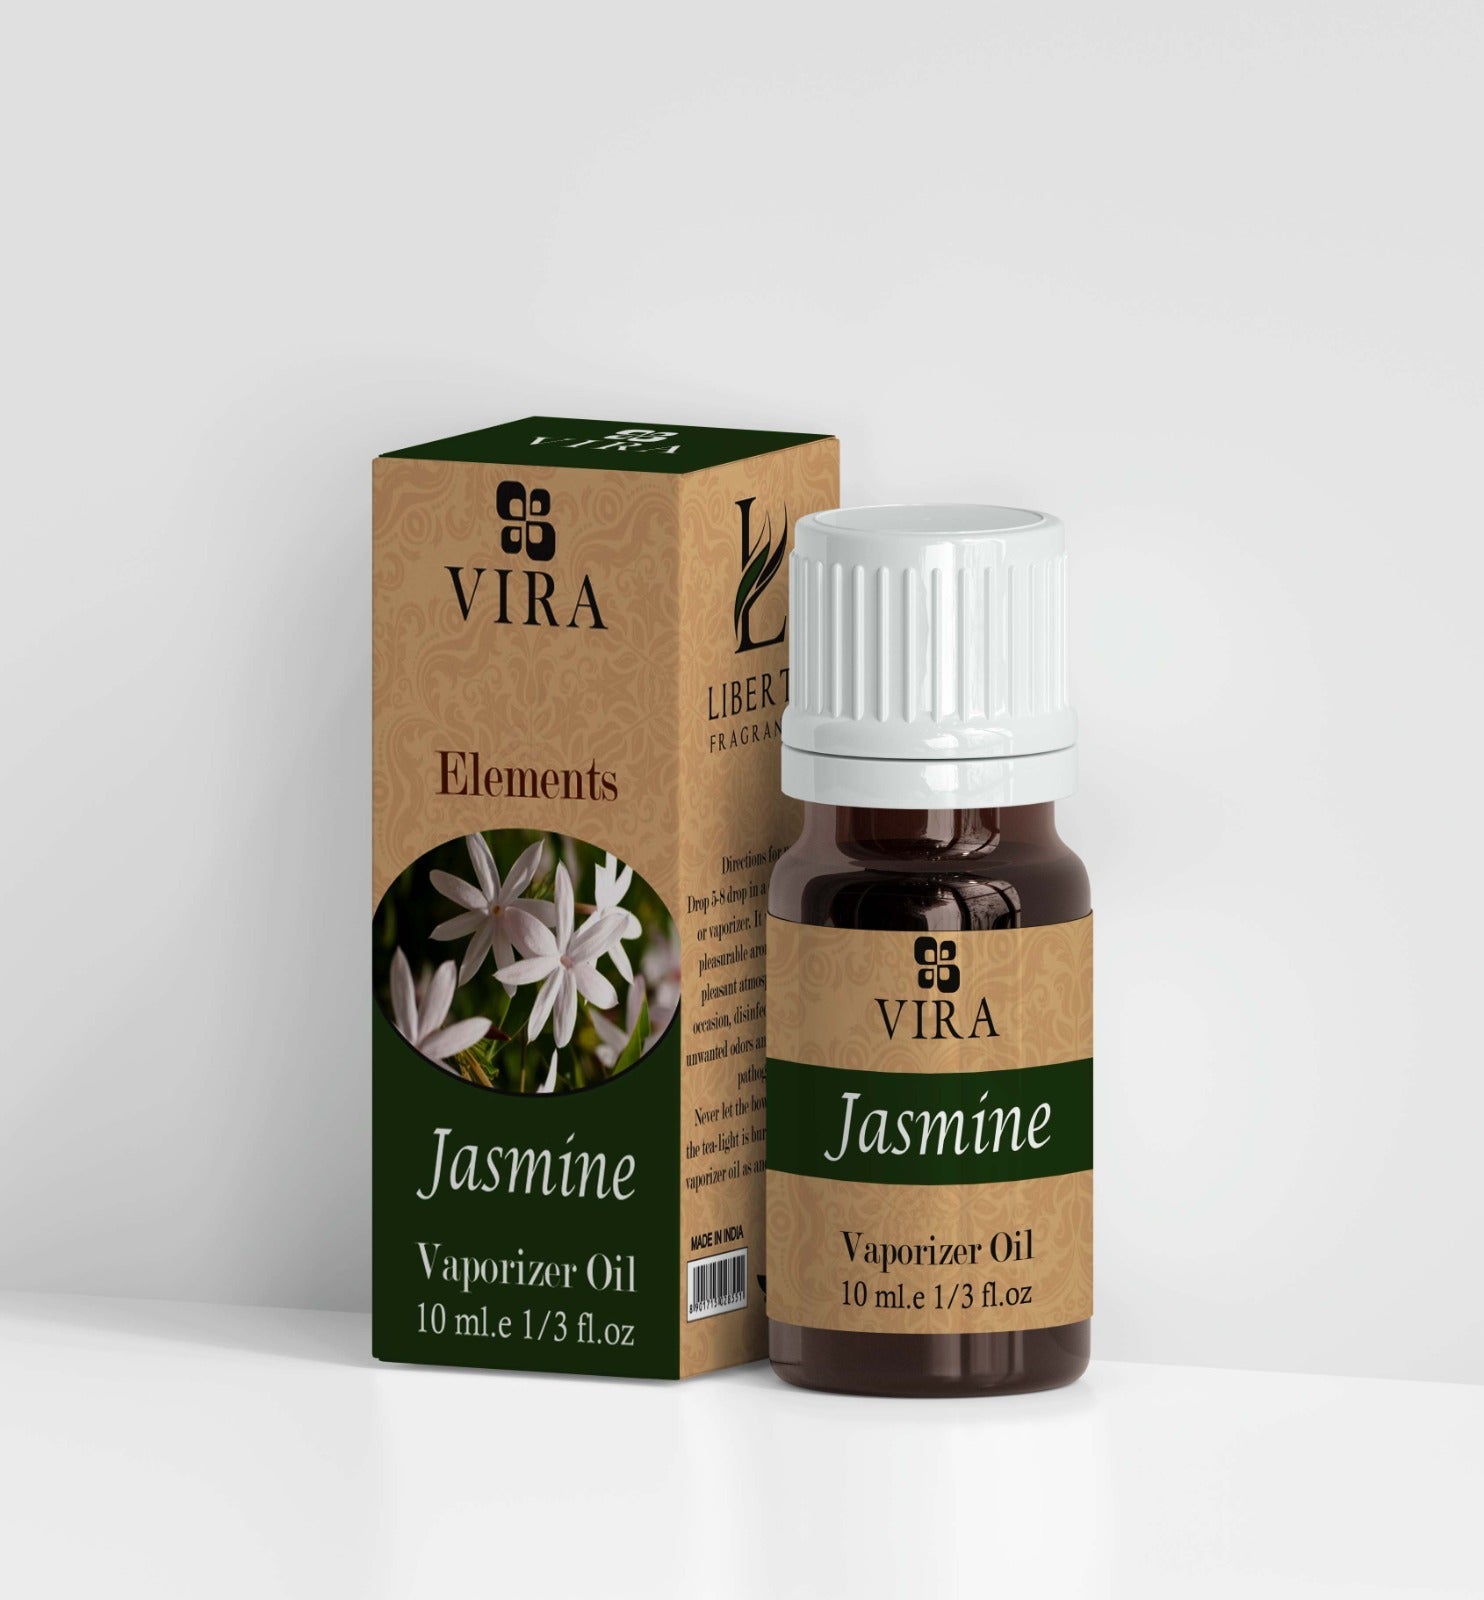 Jasmine - Elements collection vaporizer oil by Vira - scentingsecrets